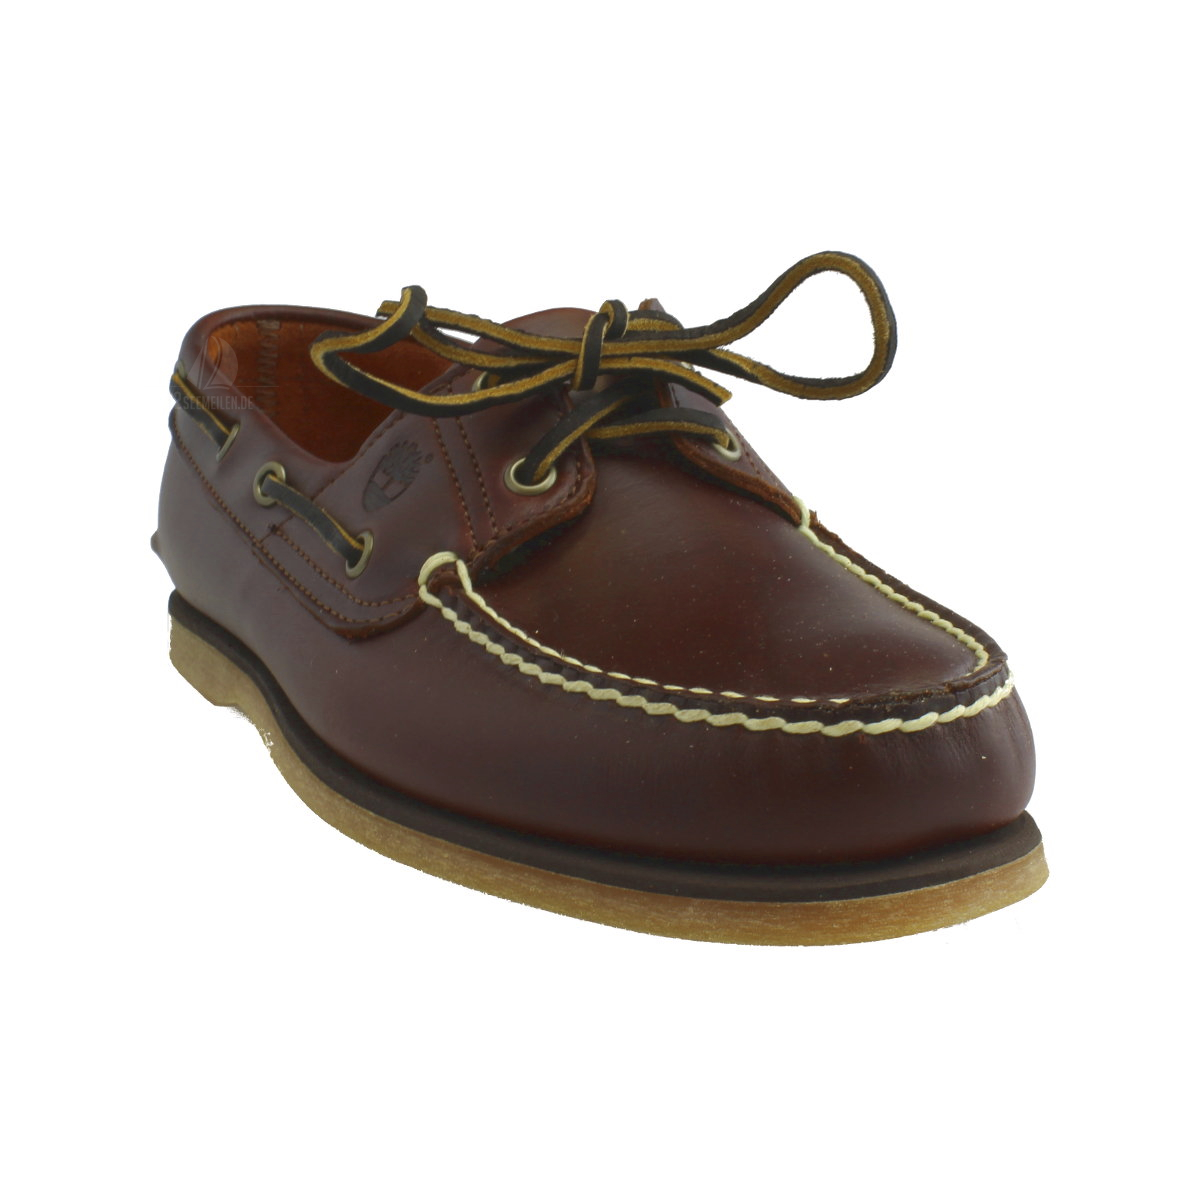 Timberland Classic Boat chaussures bateau Hommes brun - rouge eu 43,5 ( us 9,5 )